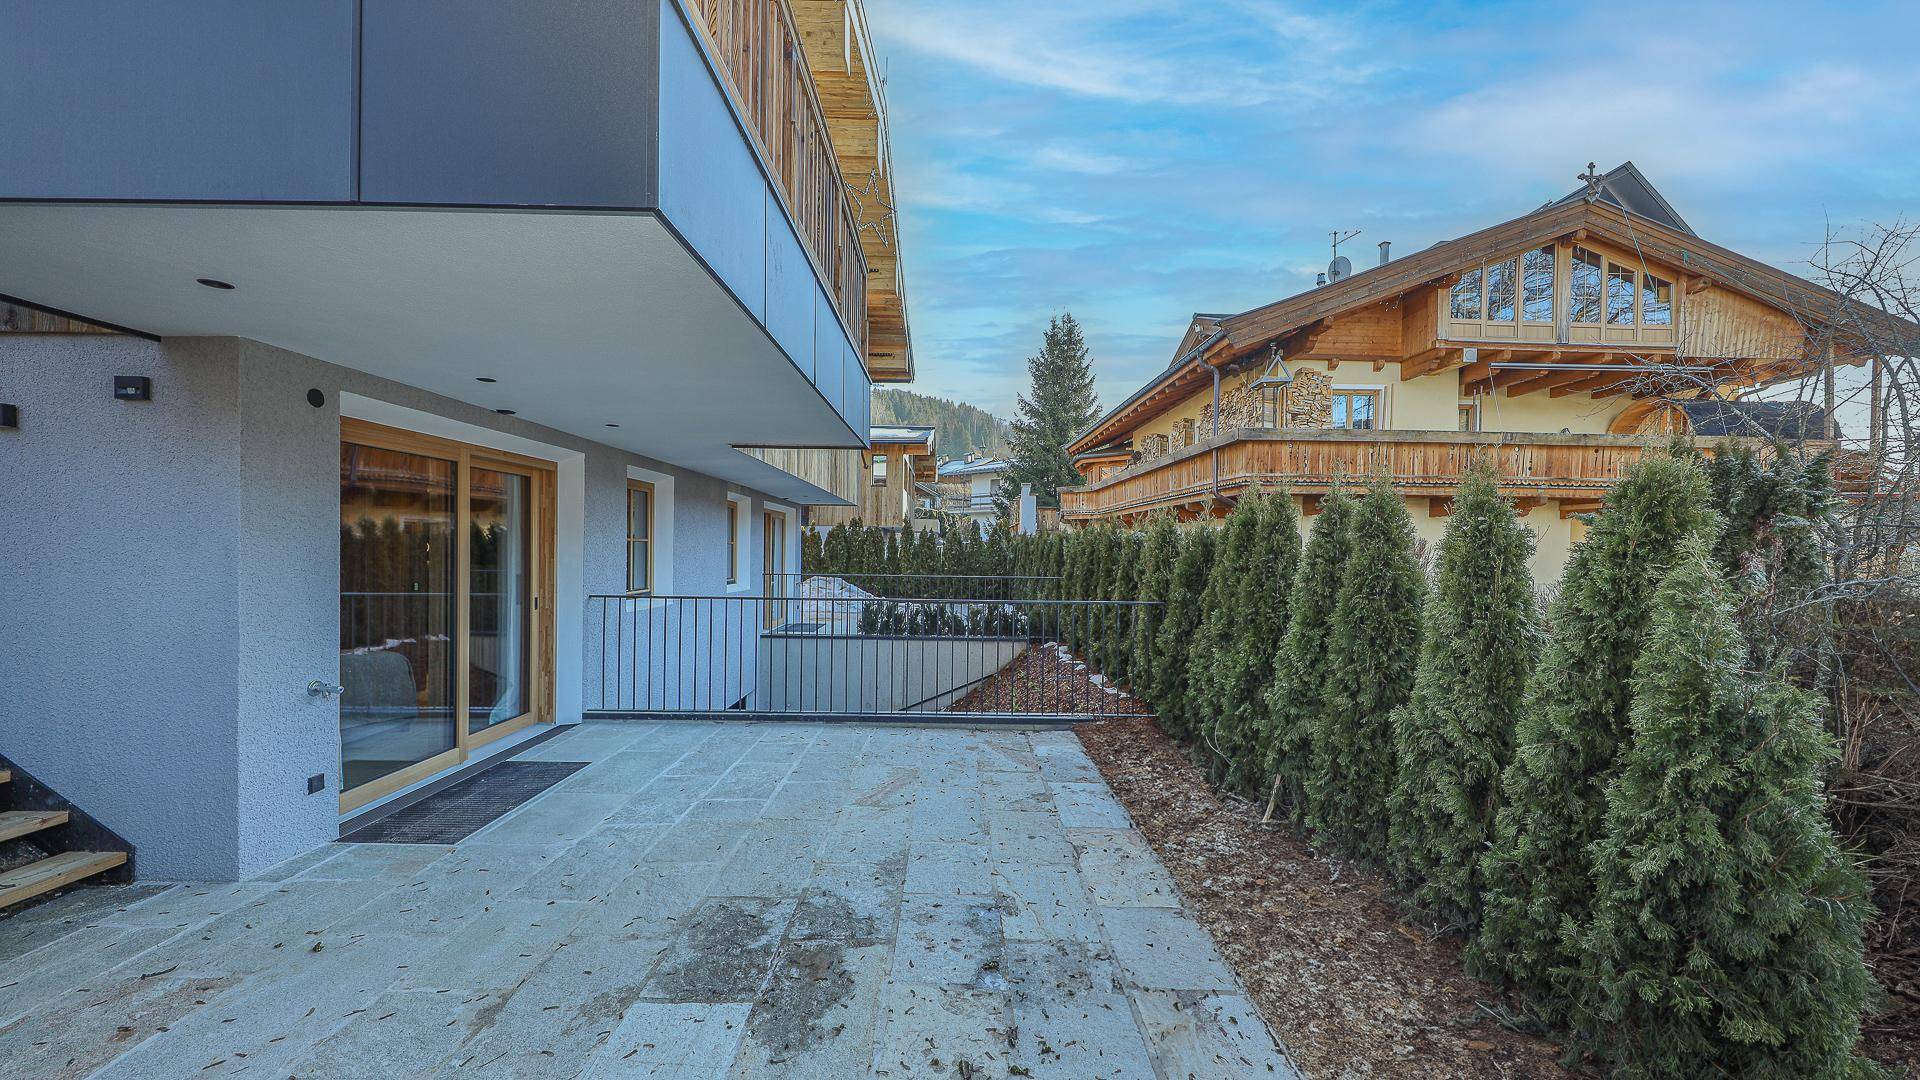 KITZIMMO-Neubauchalets in Toplage kaufen - Immobilien Kitzbühel Tirol.